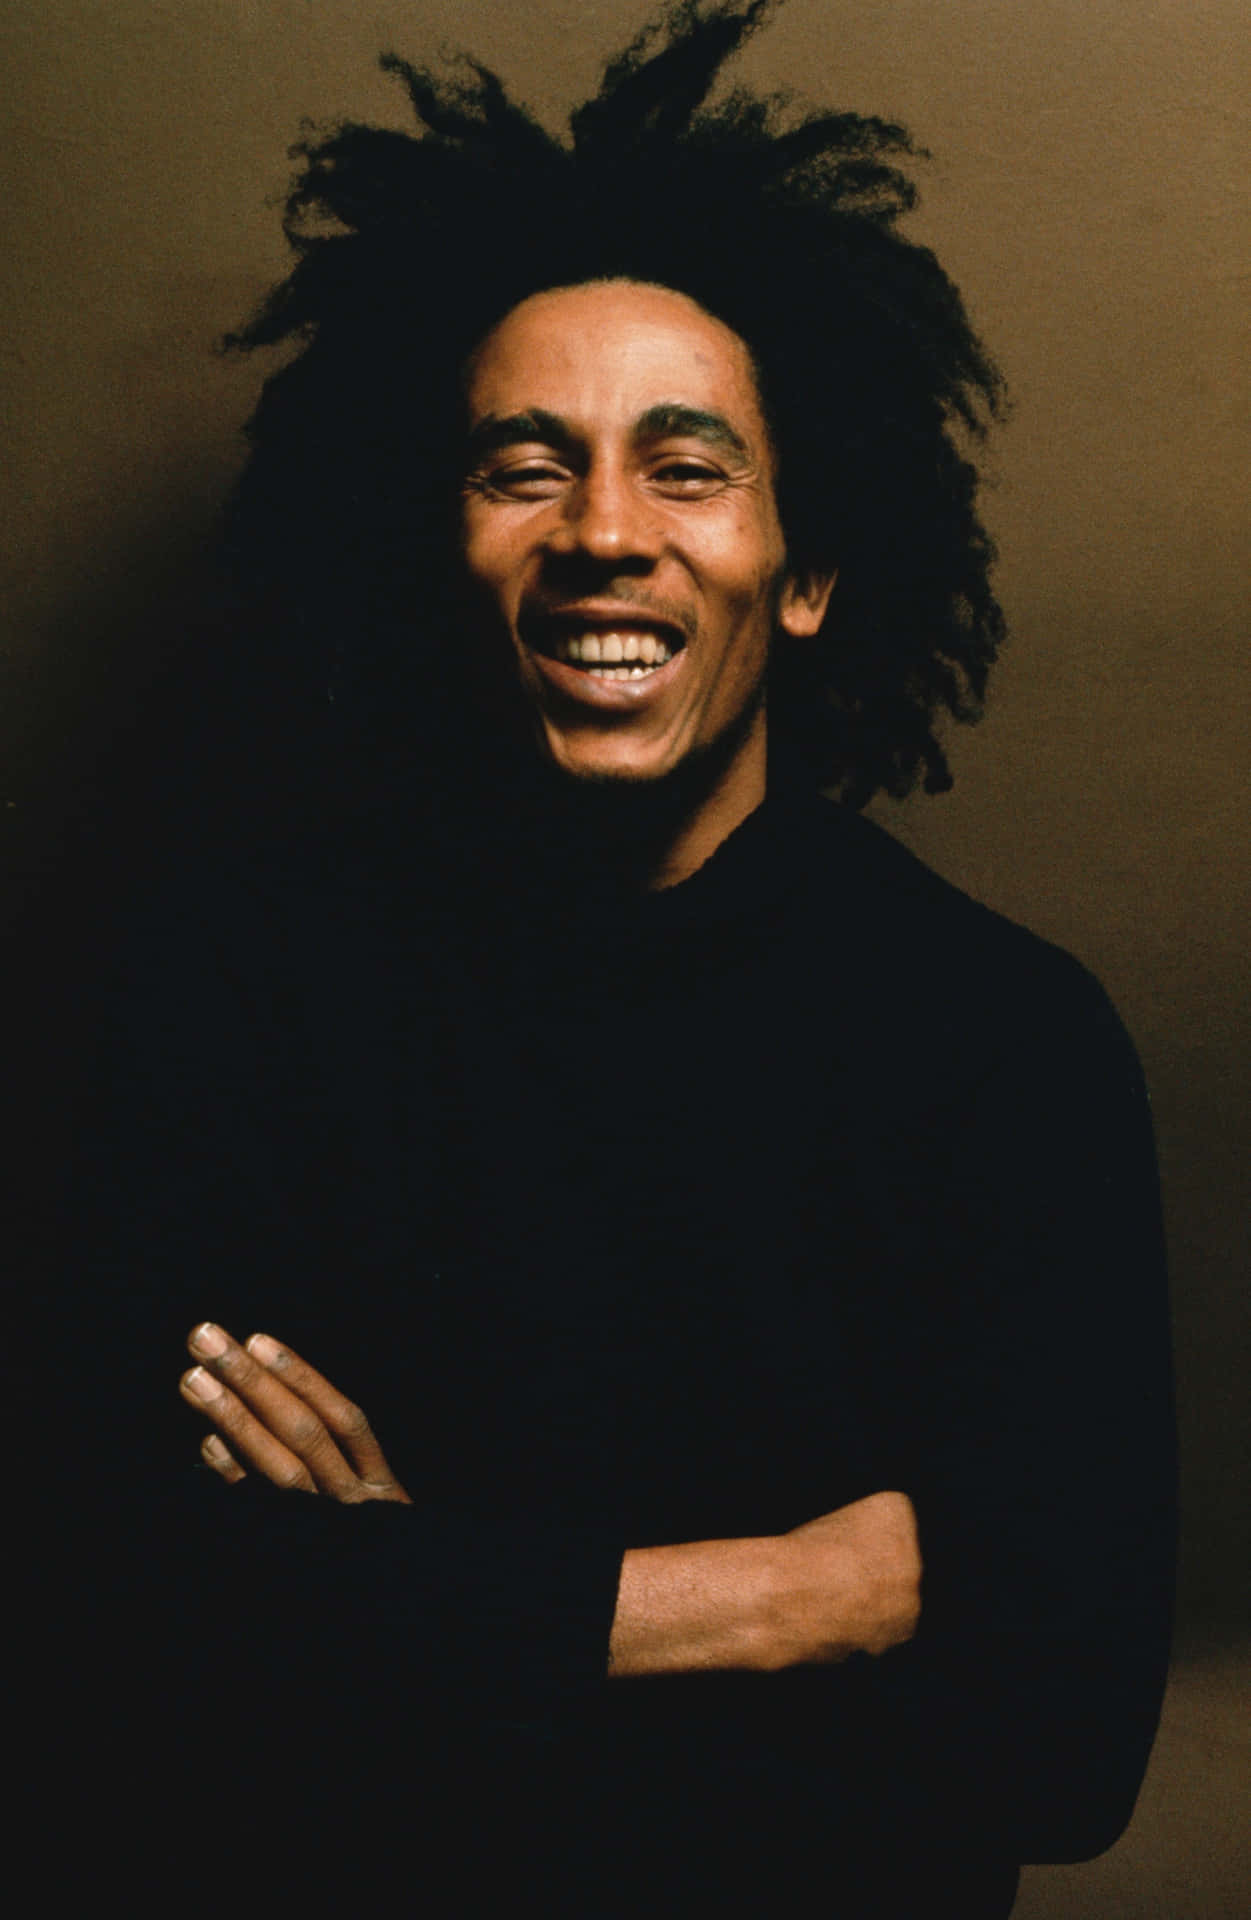 Bob Marley - A Man With Dreadlocks And A Smile